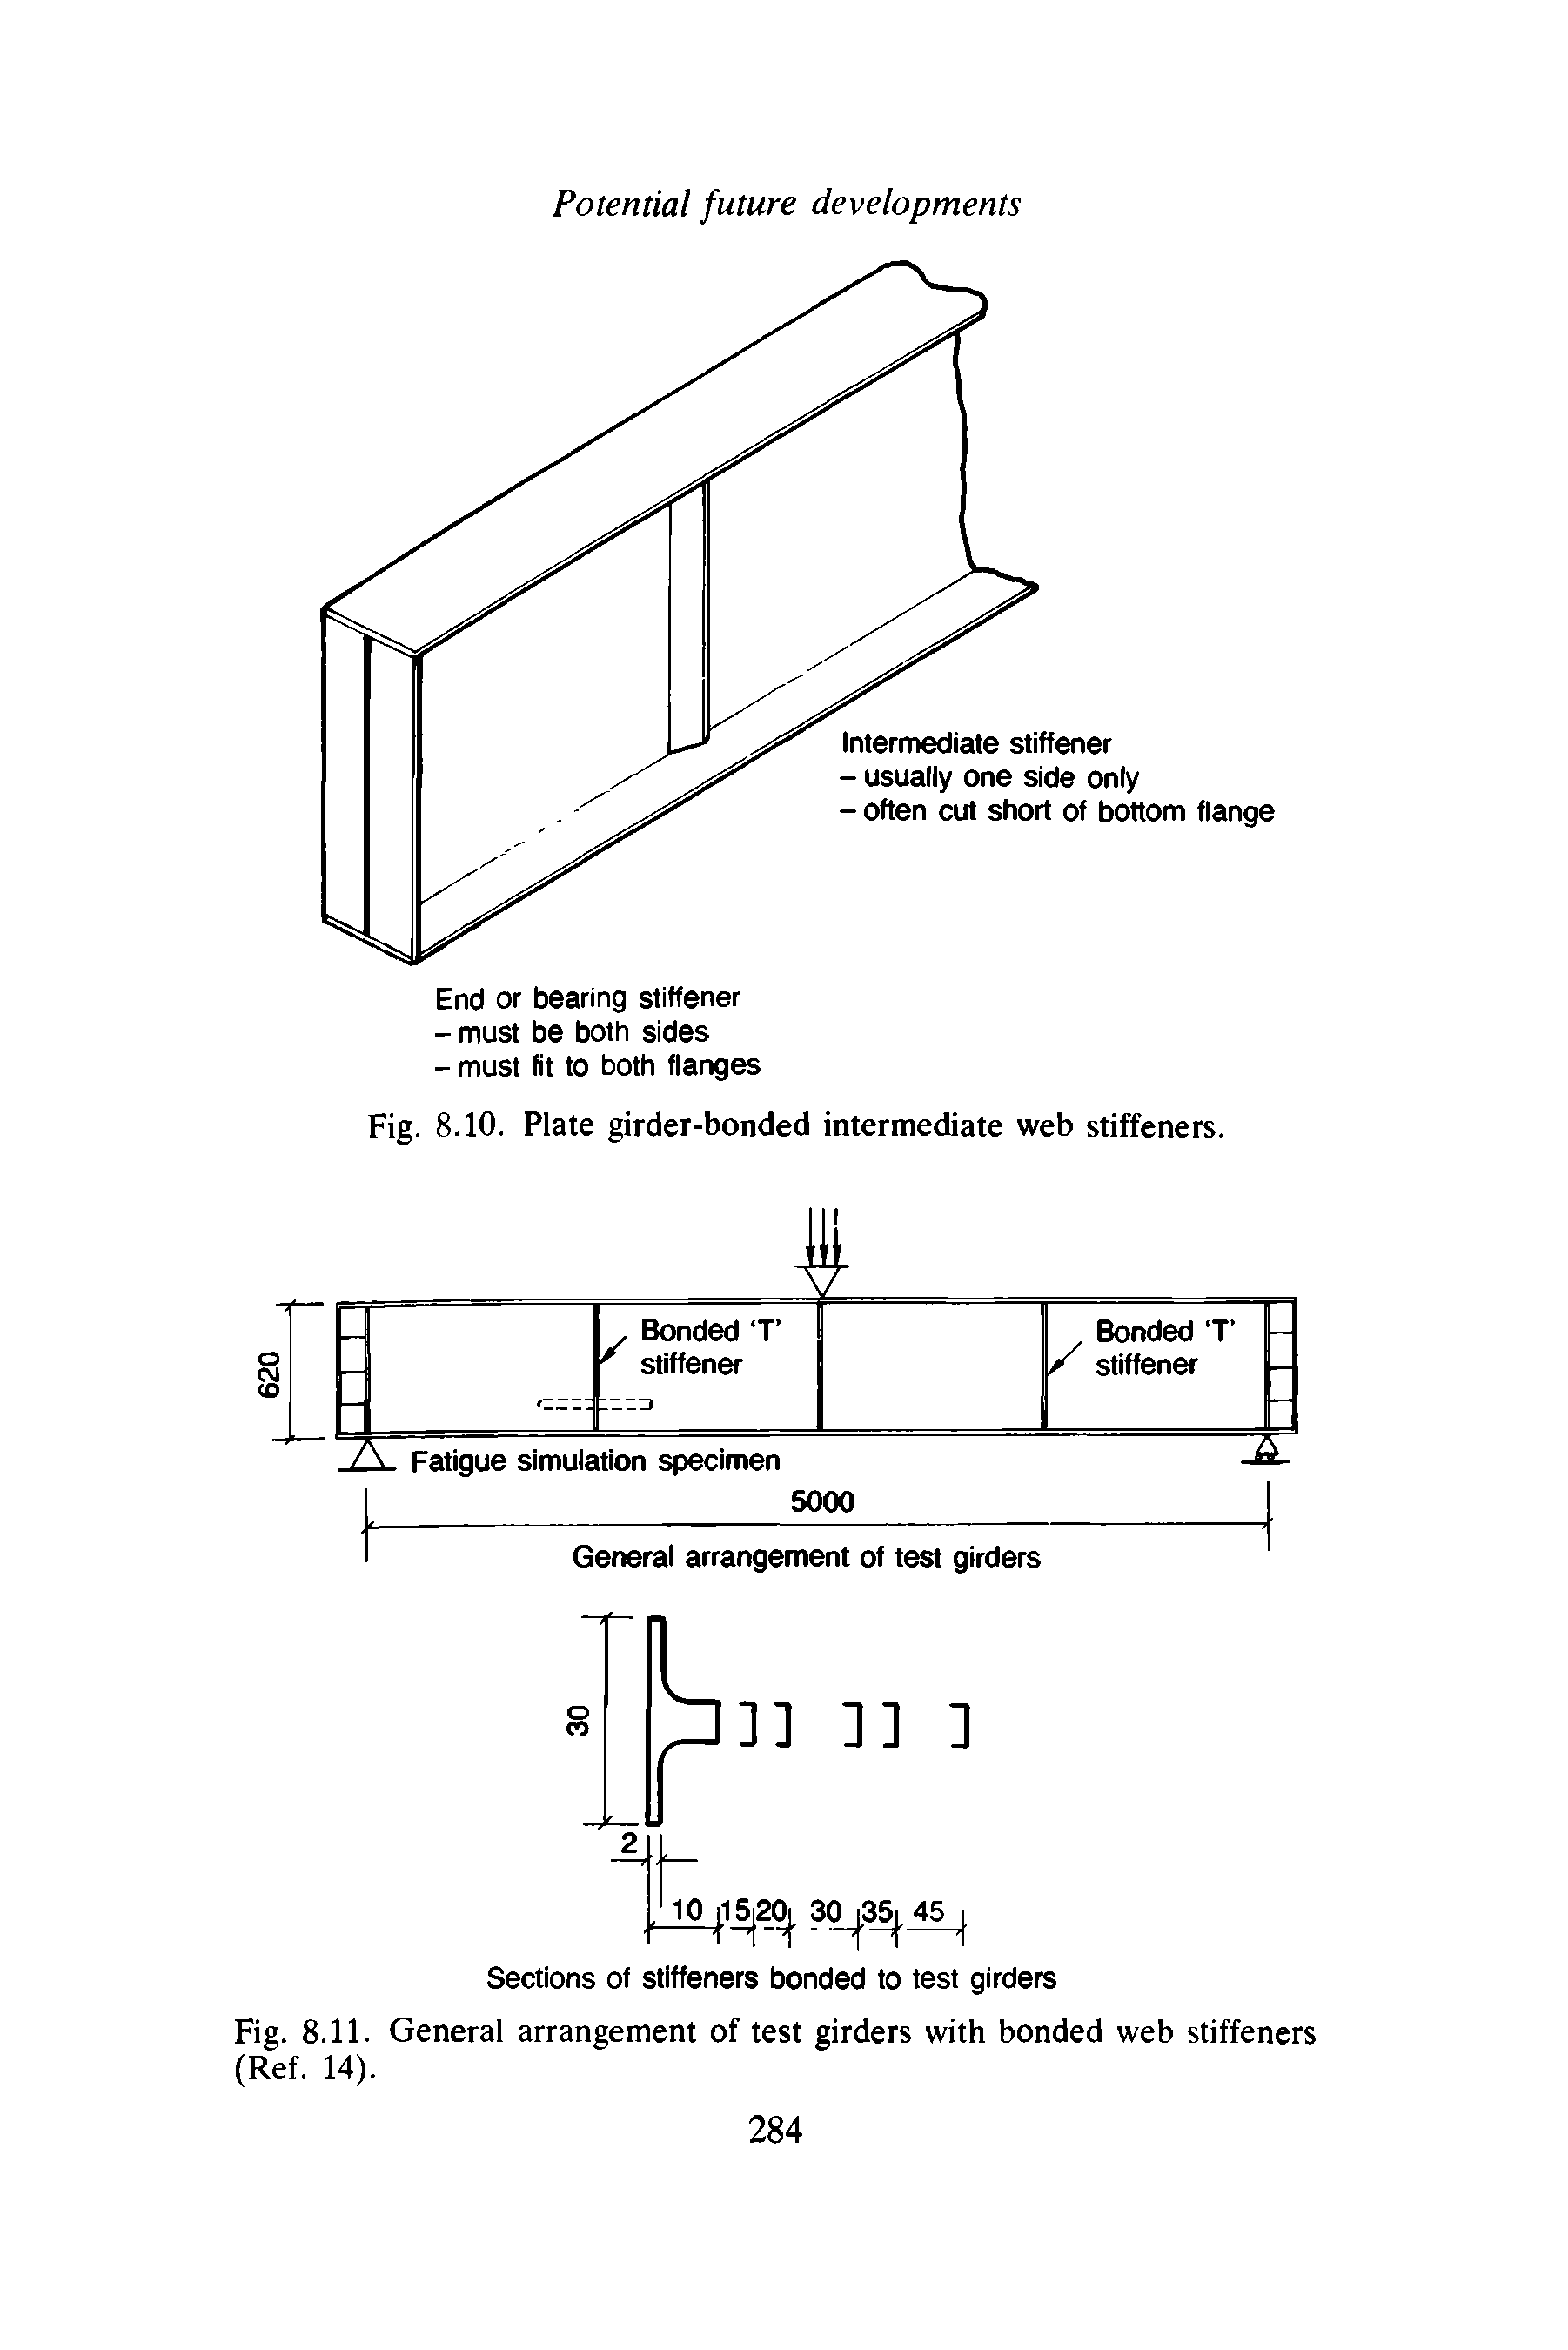 Fig. 8.11. General arrangement of test girders with bonded web stiffeners (Ref. 14).